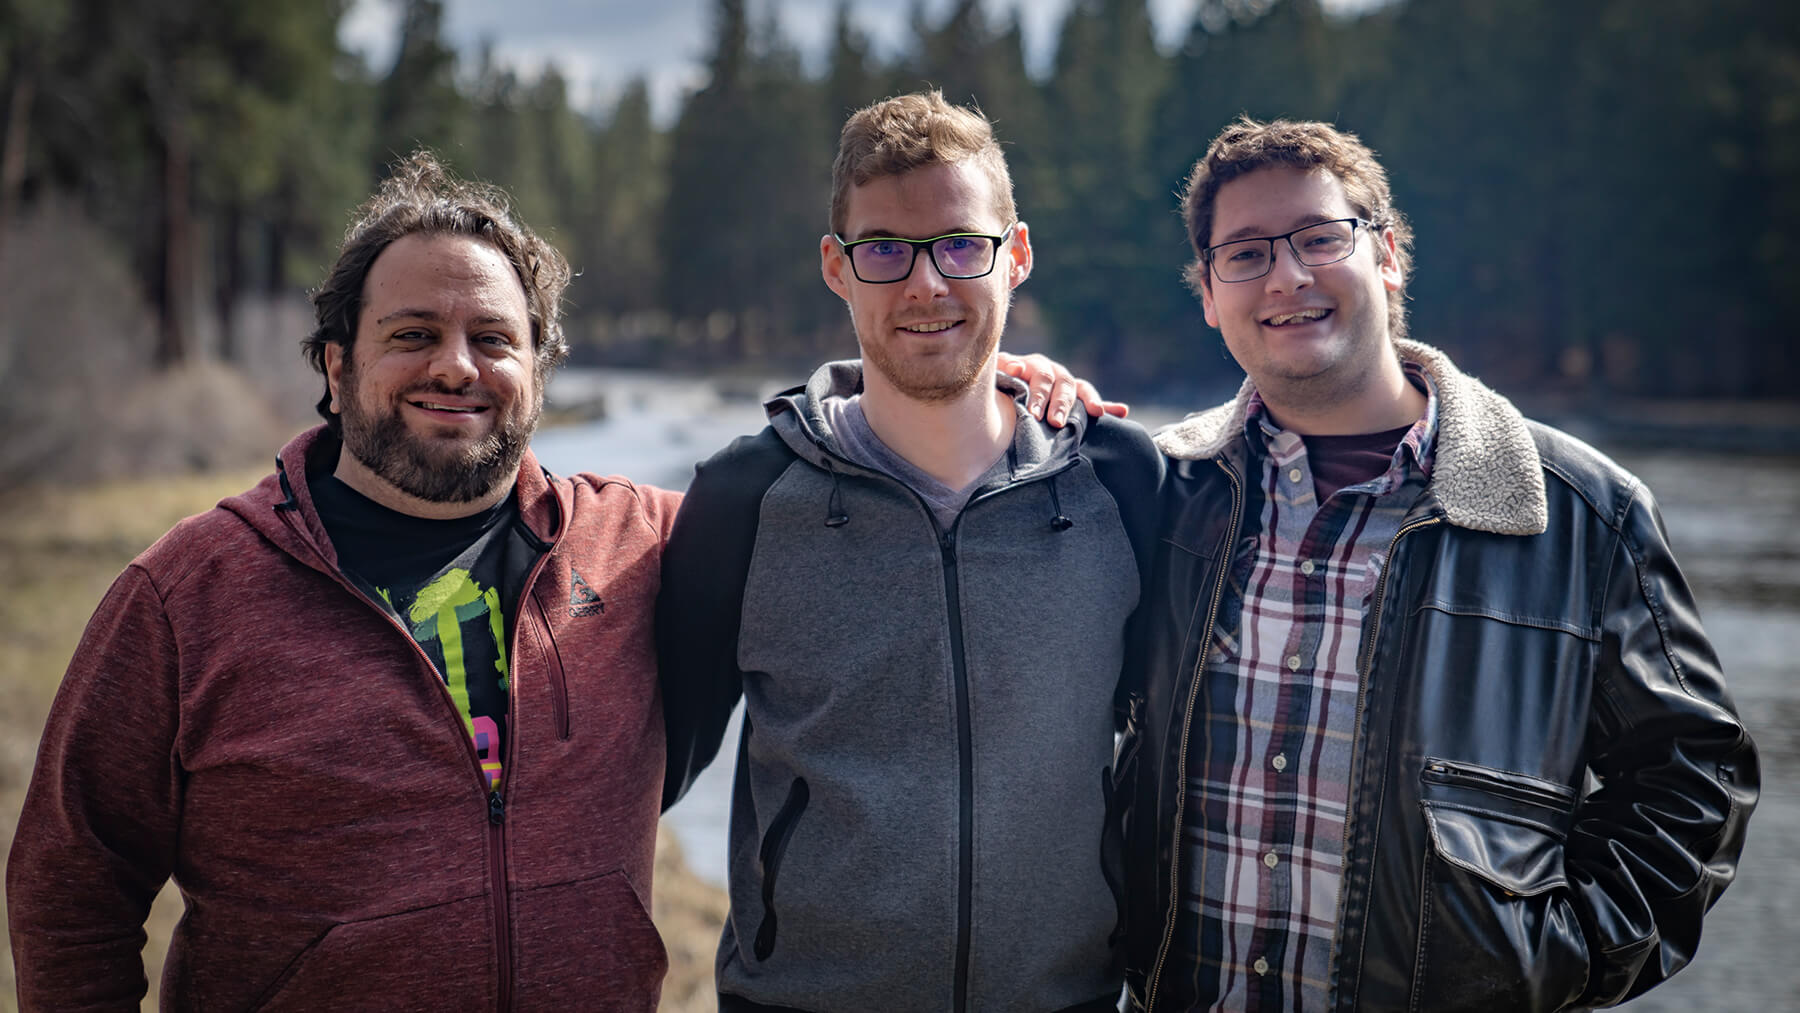 DigiPen alumni Geoffrey Hammon, Sawyer Paradise, and Jacob Fieth pose in the Bend, Oregon wilderness.